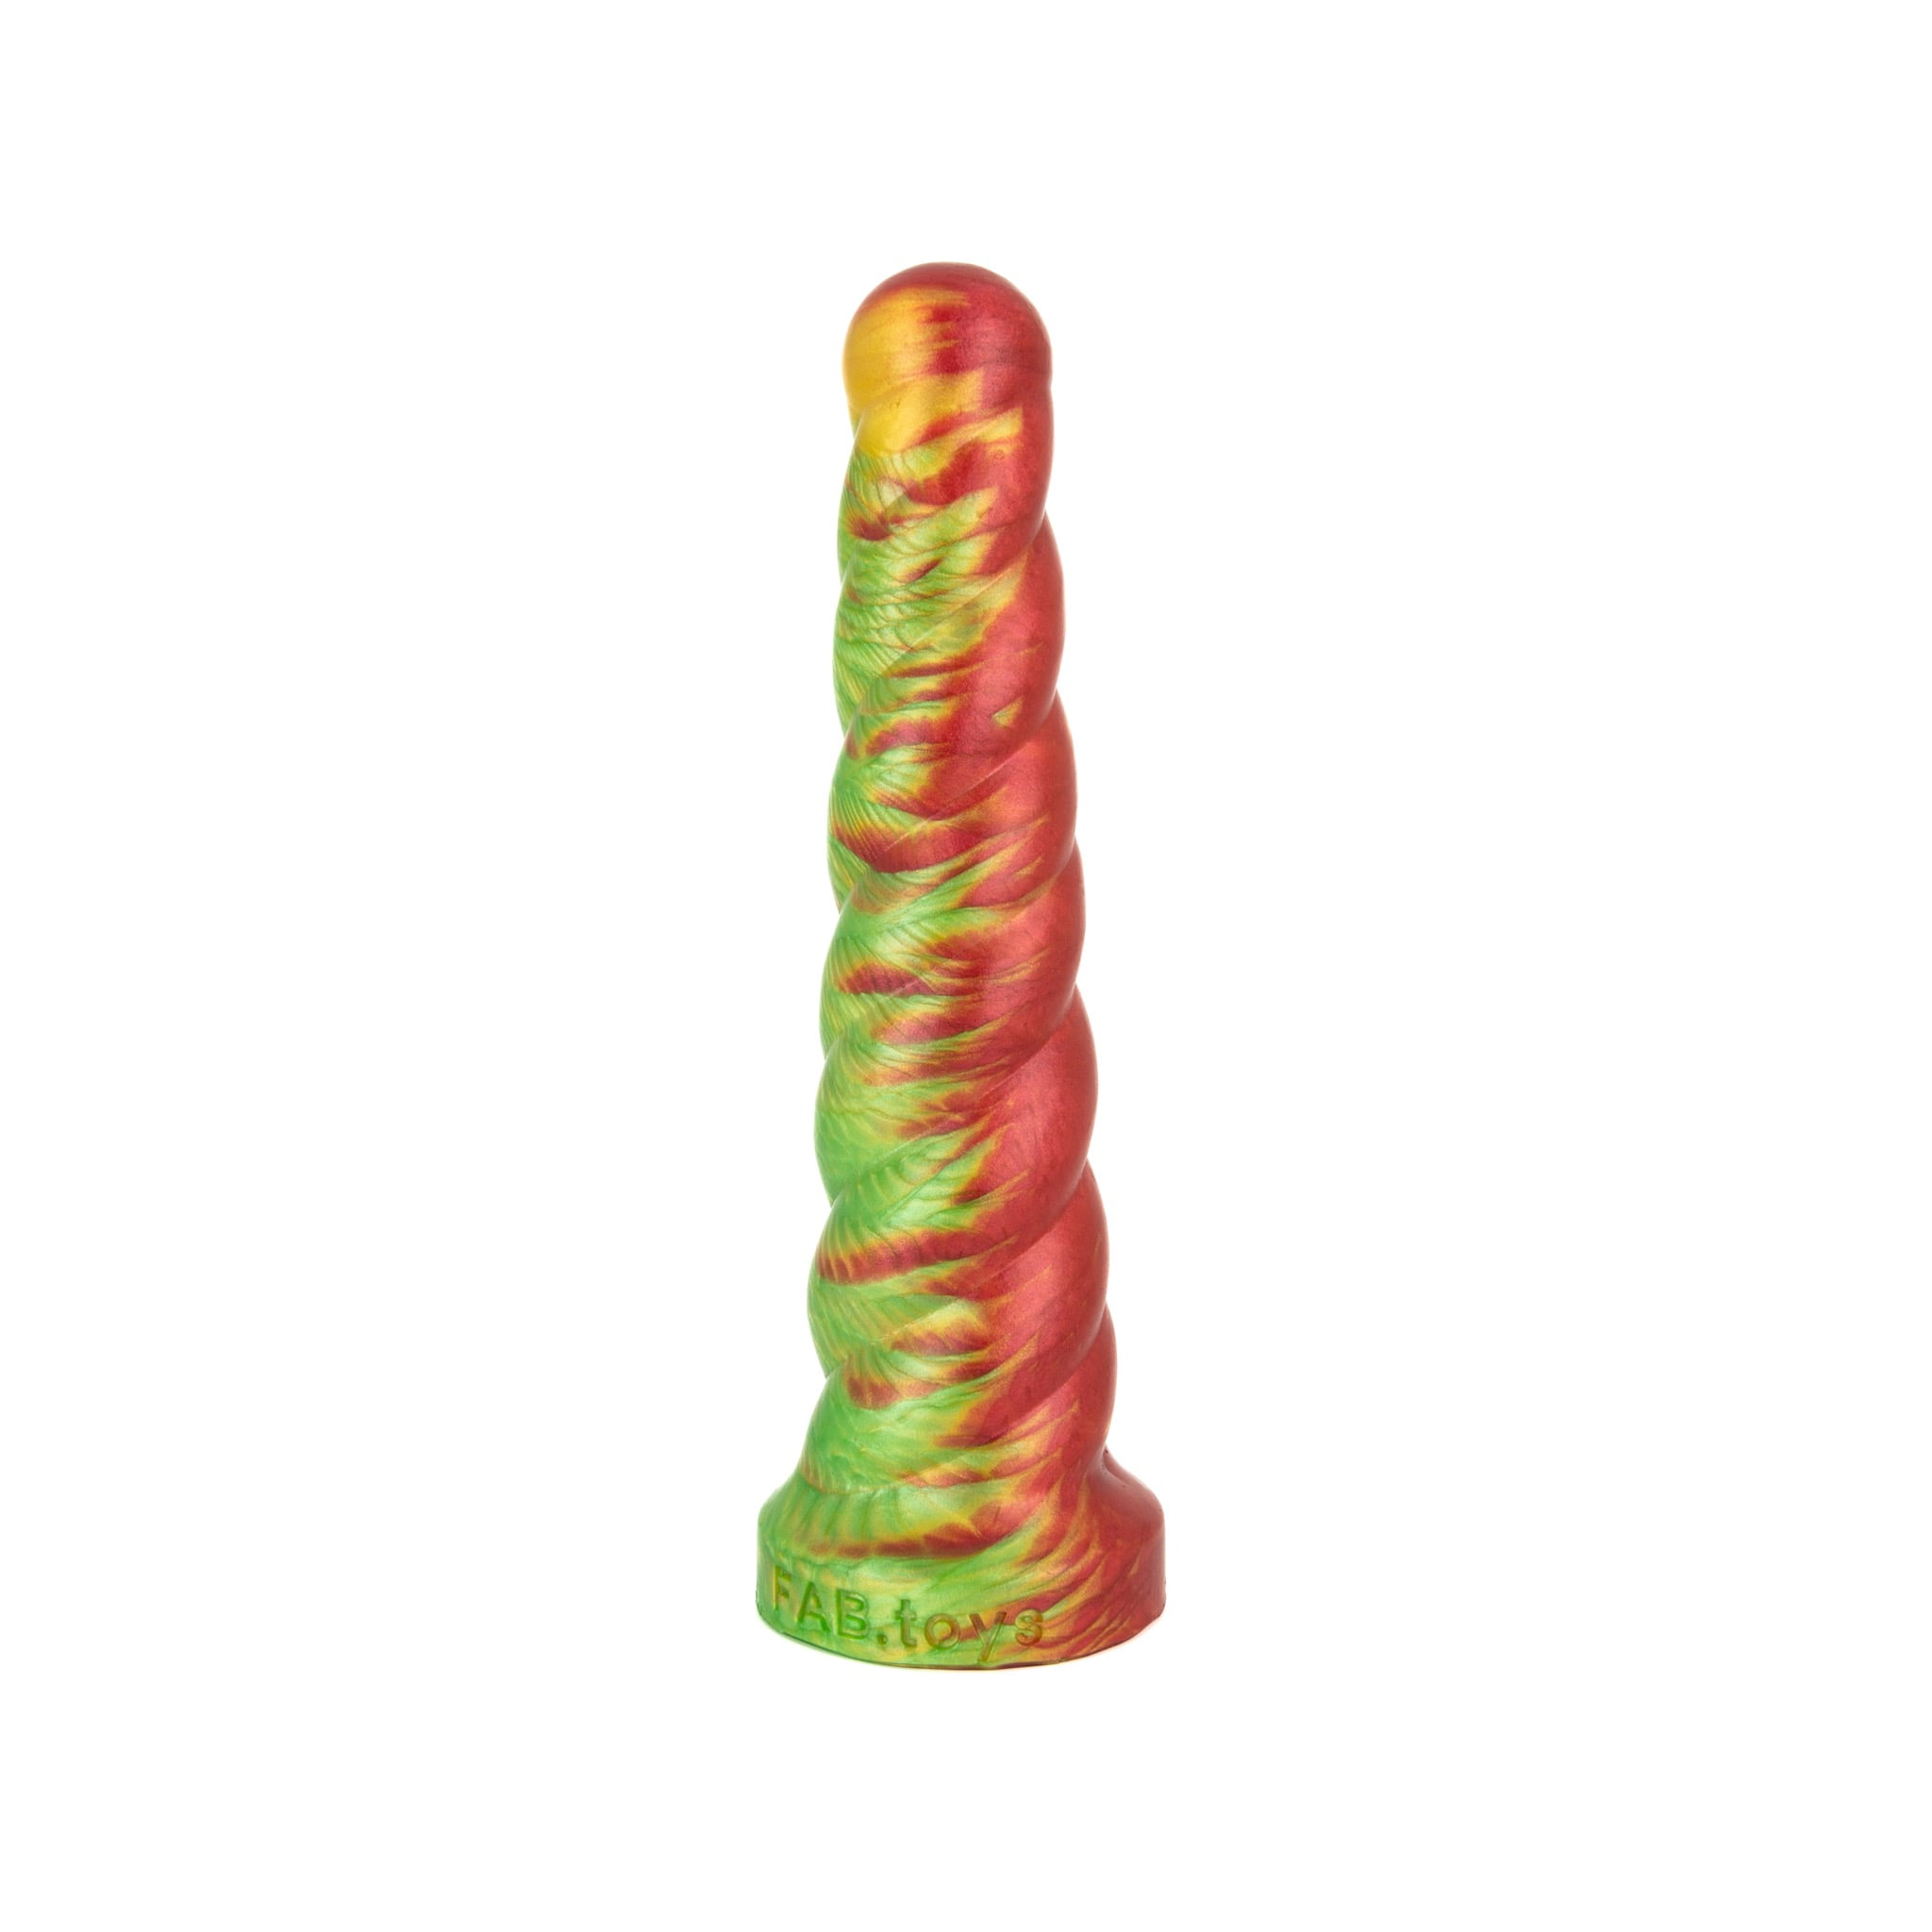 FAB.toys - Twister Medium